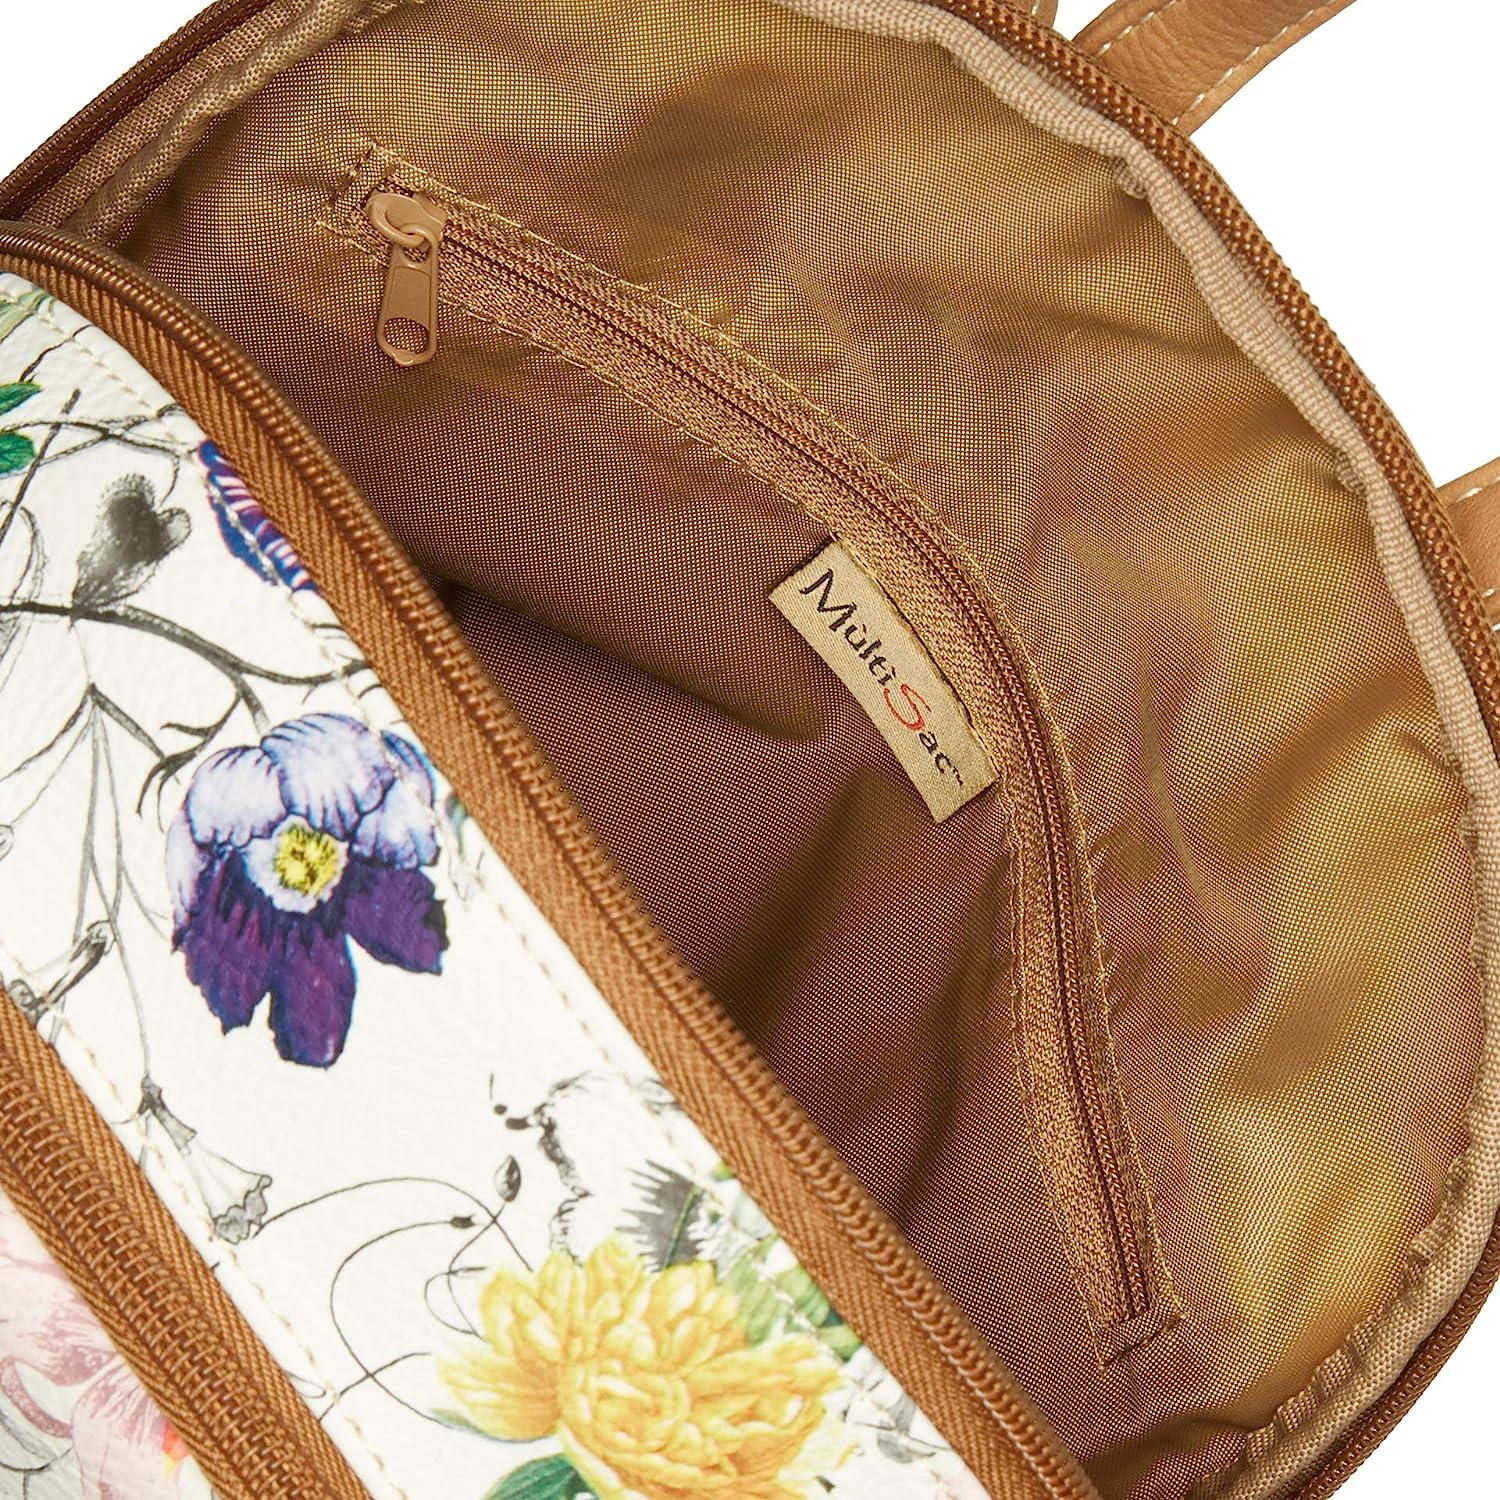 MultiSac, Bags, Multisac Adele Backpack